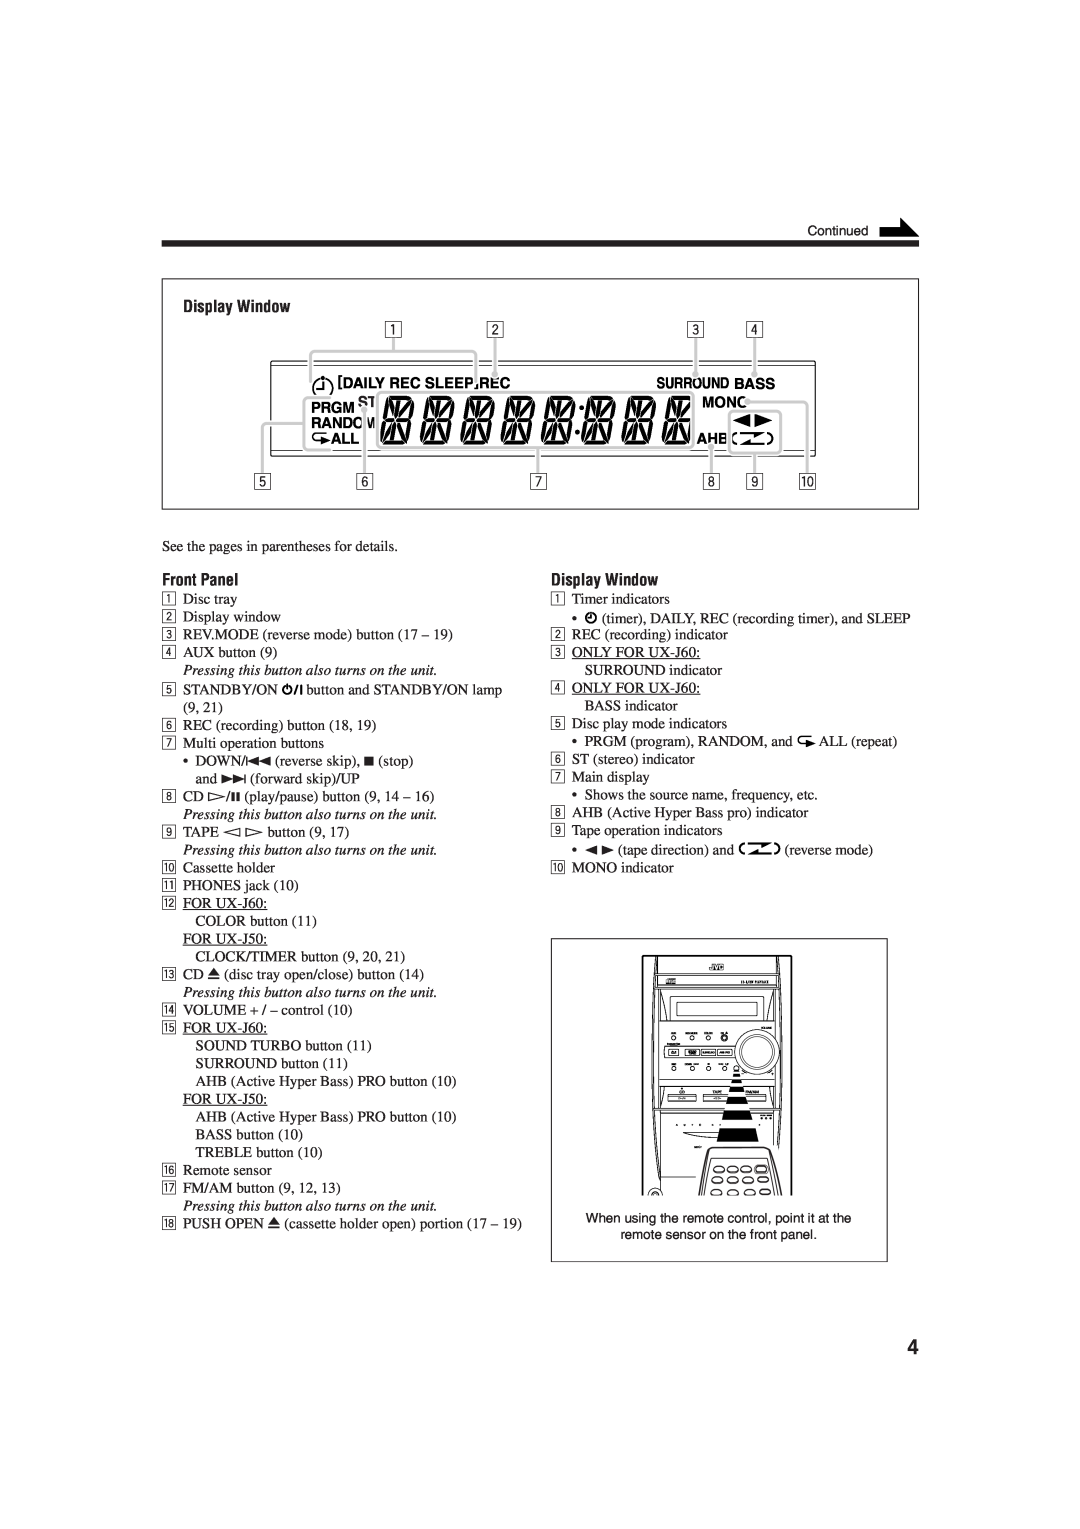 JVC UX-J60 manual 8 9 p, Daily Rec Sleeprec, Mono, Random, Pressing this button also turns on the unit 